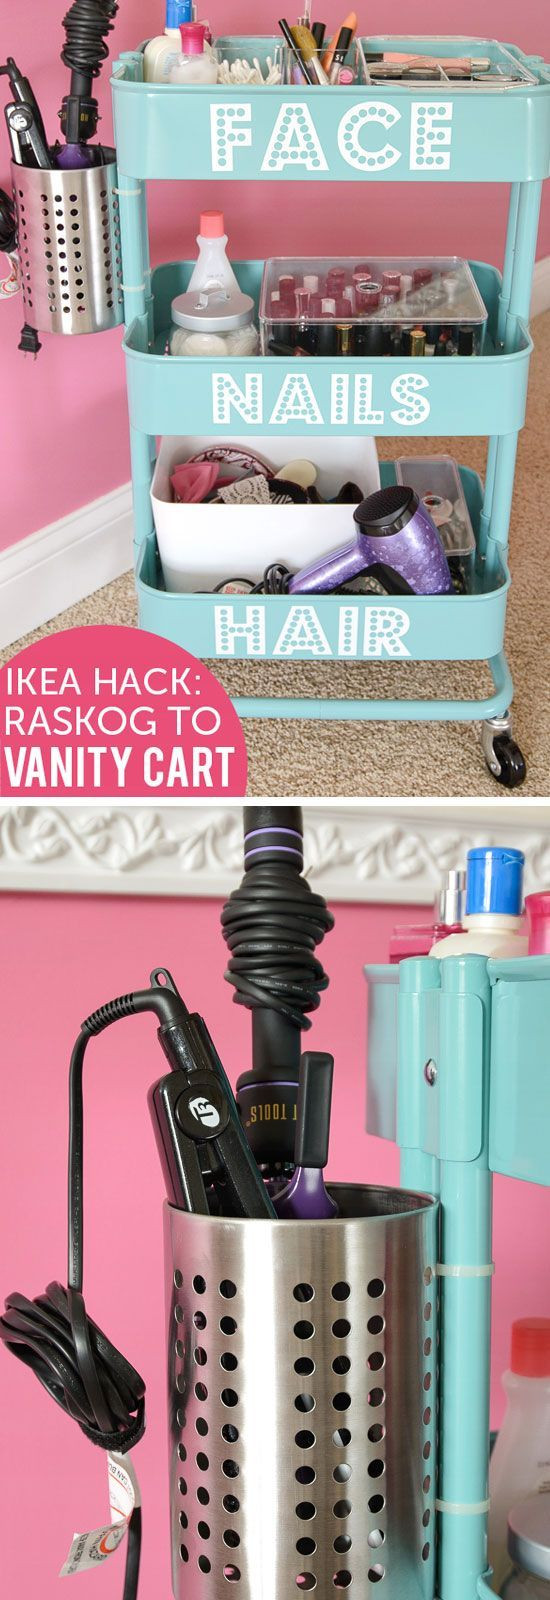 DIY Room Organization For Teens
 Ikea Vanity Cart